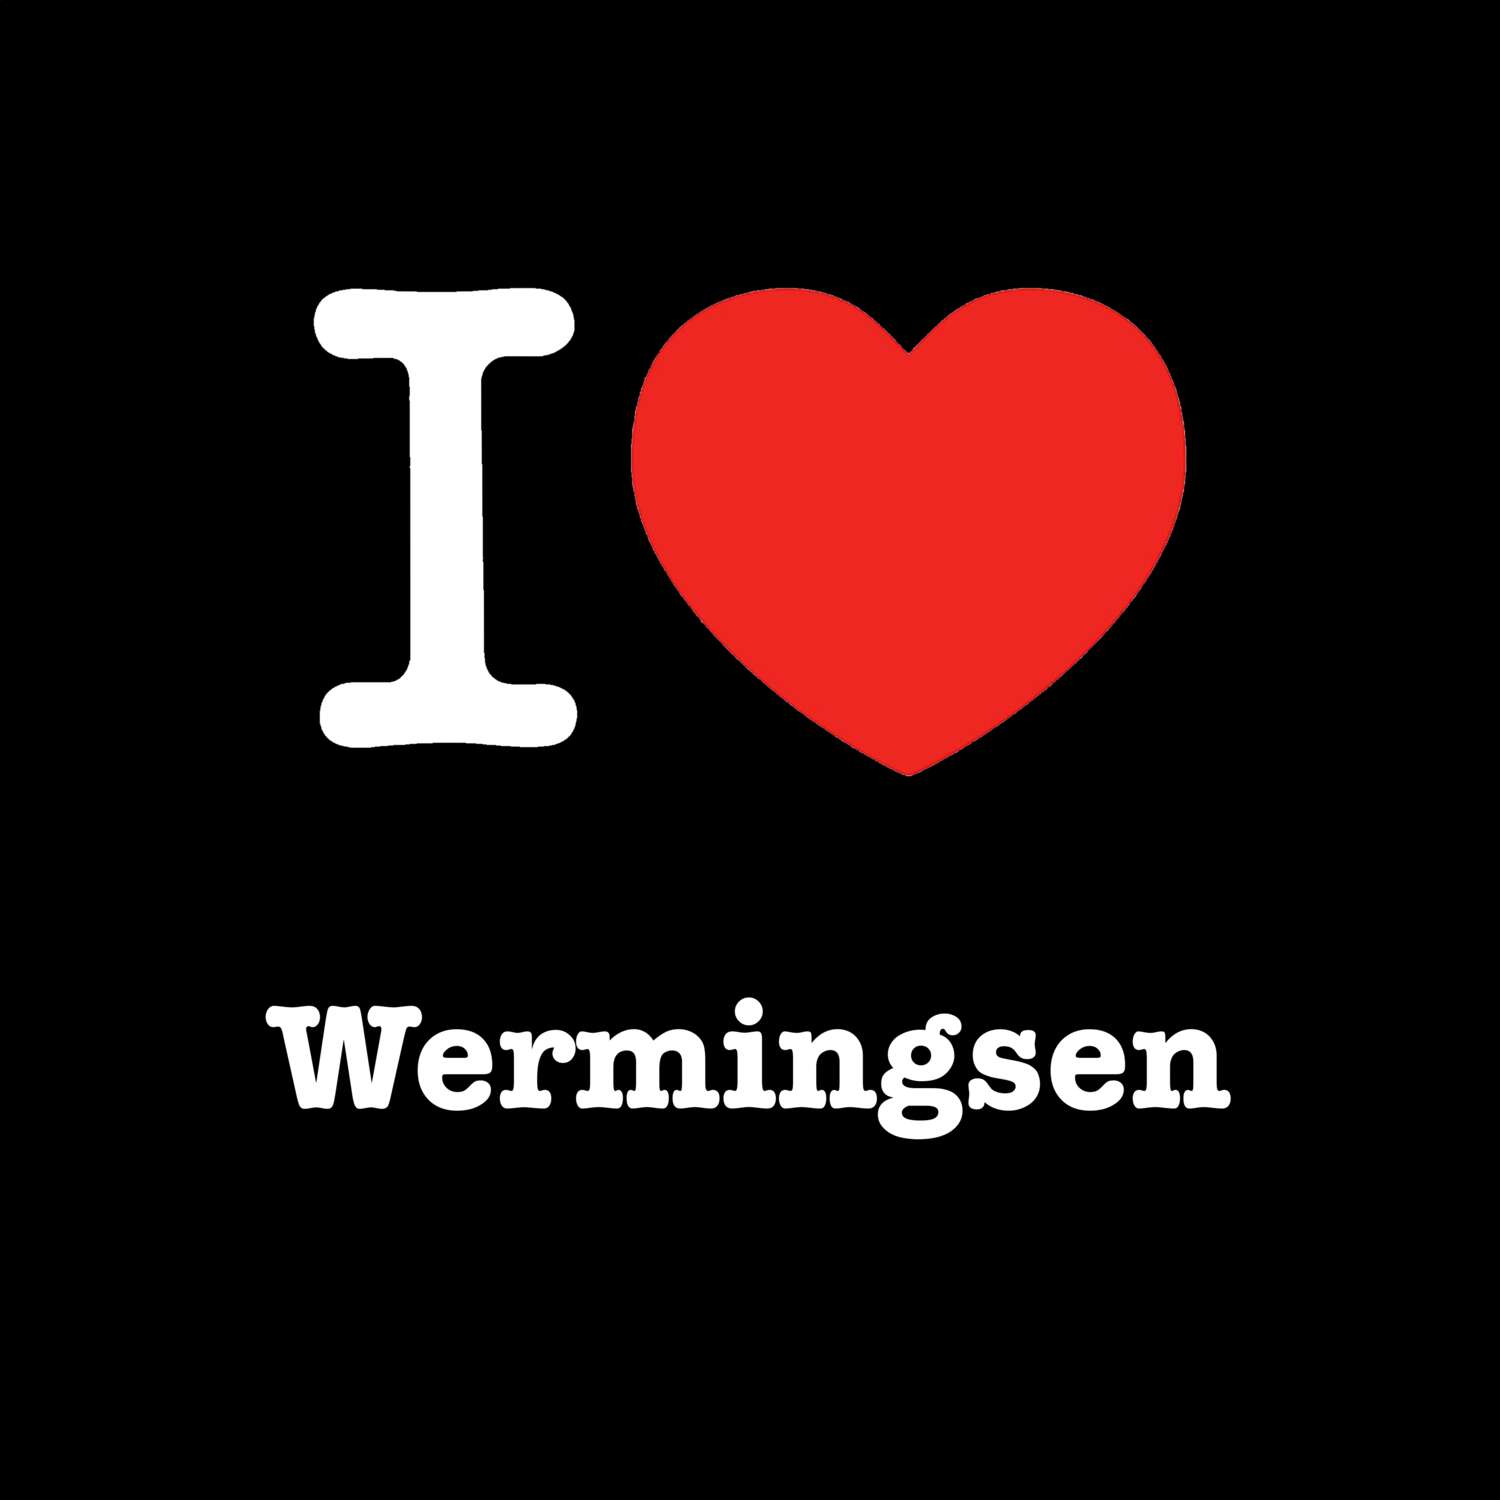 Wermingsen T-Shirt »I love«